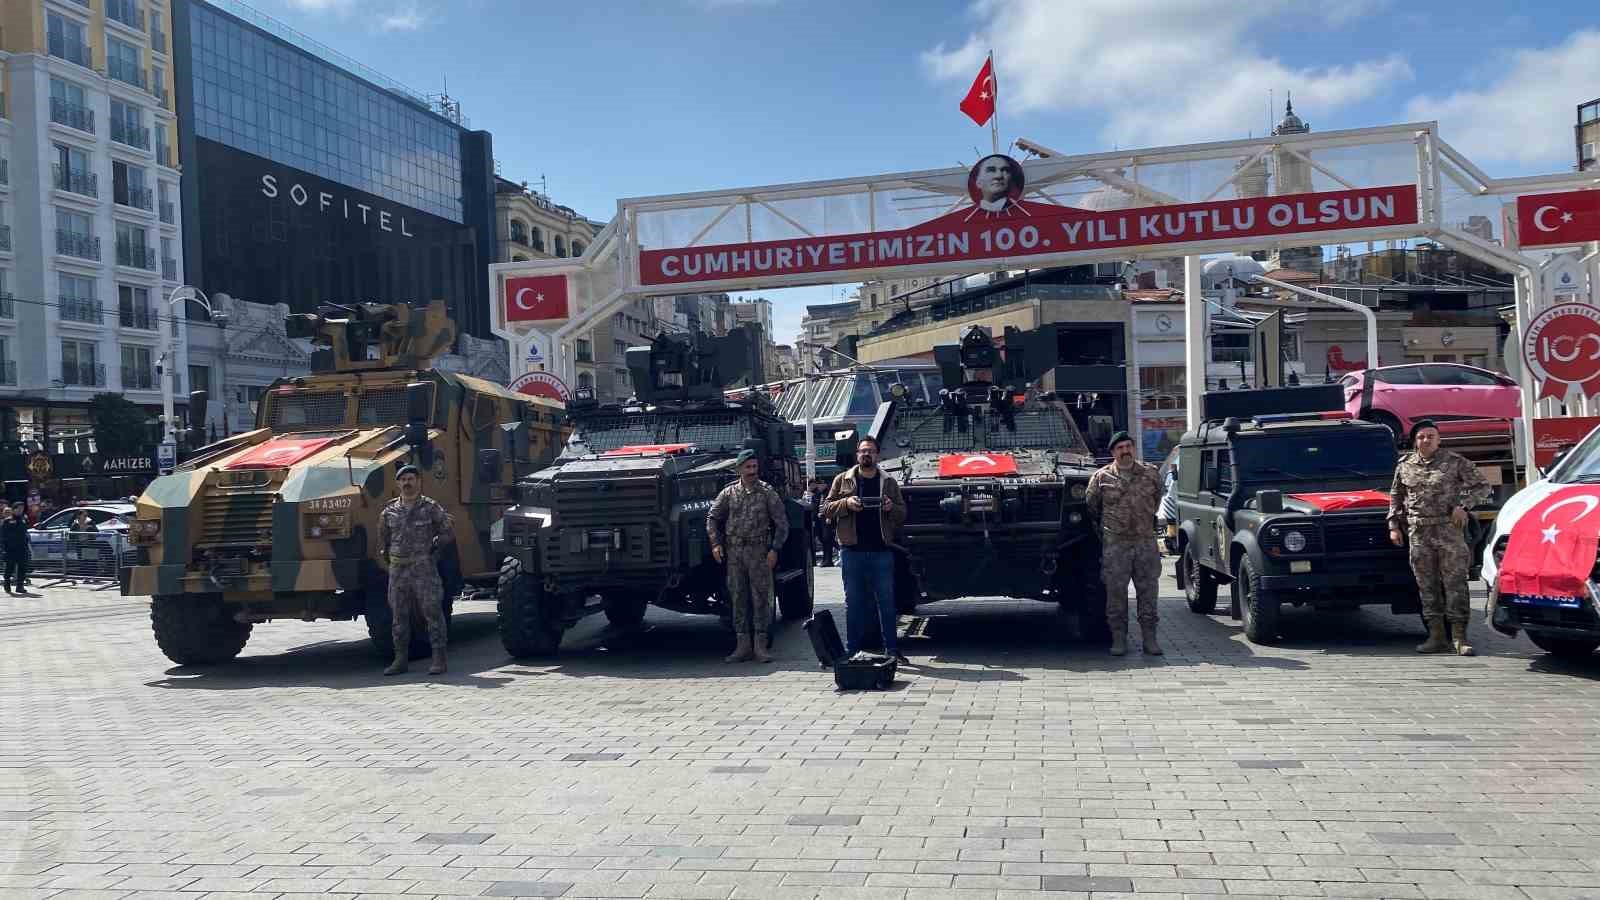 turk polis teskilatinin 179 kurulus yil donumu taksimde kutlandi 0 KO9b6EuA